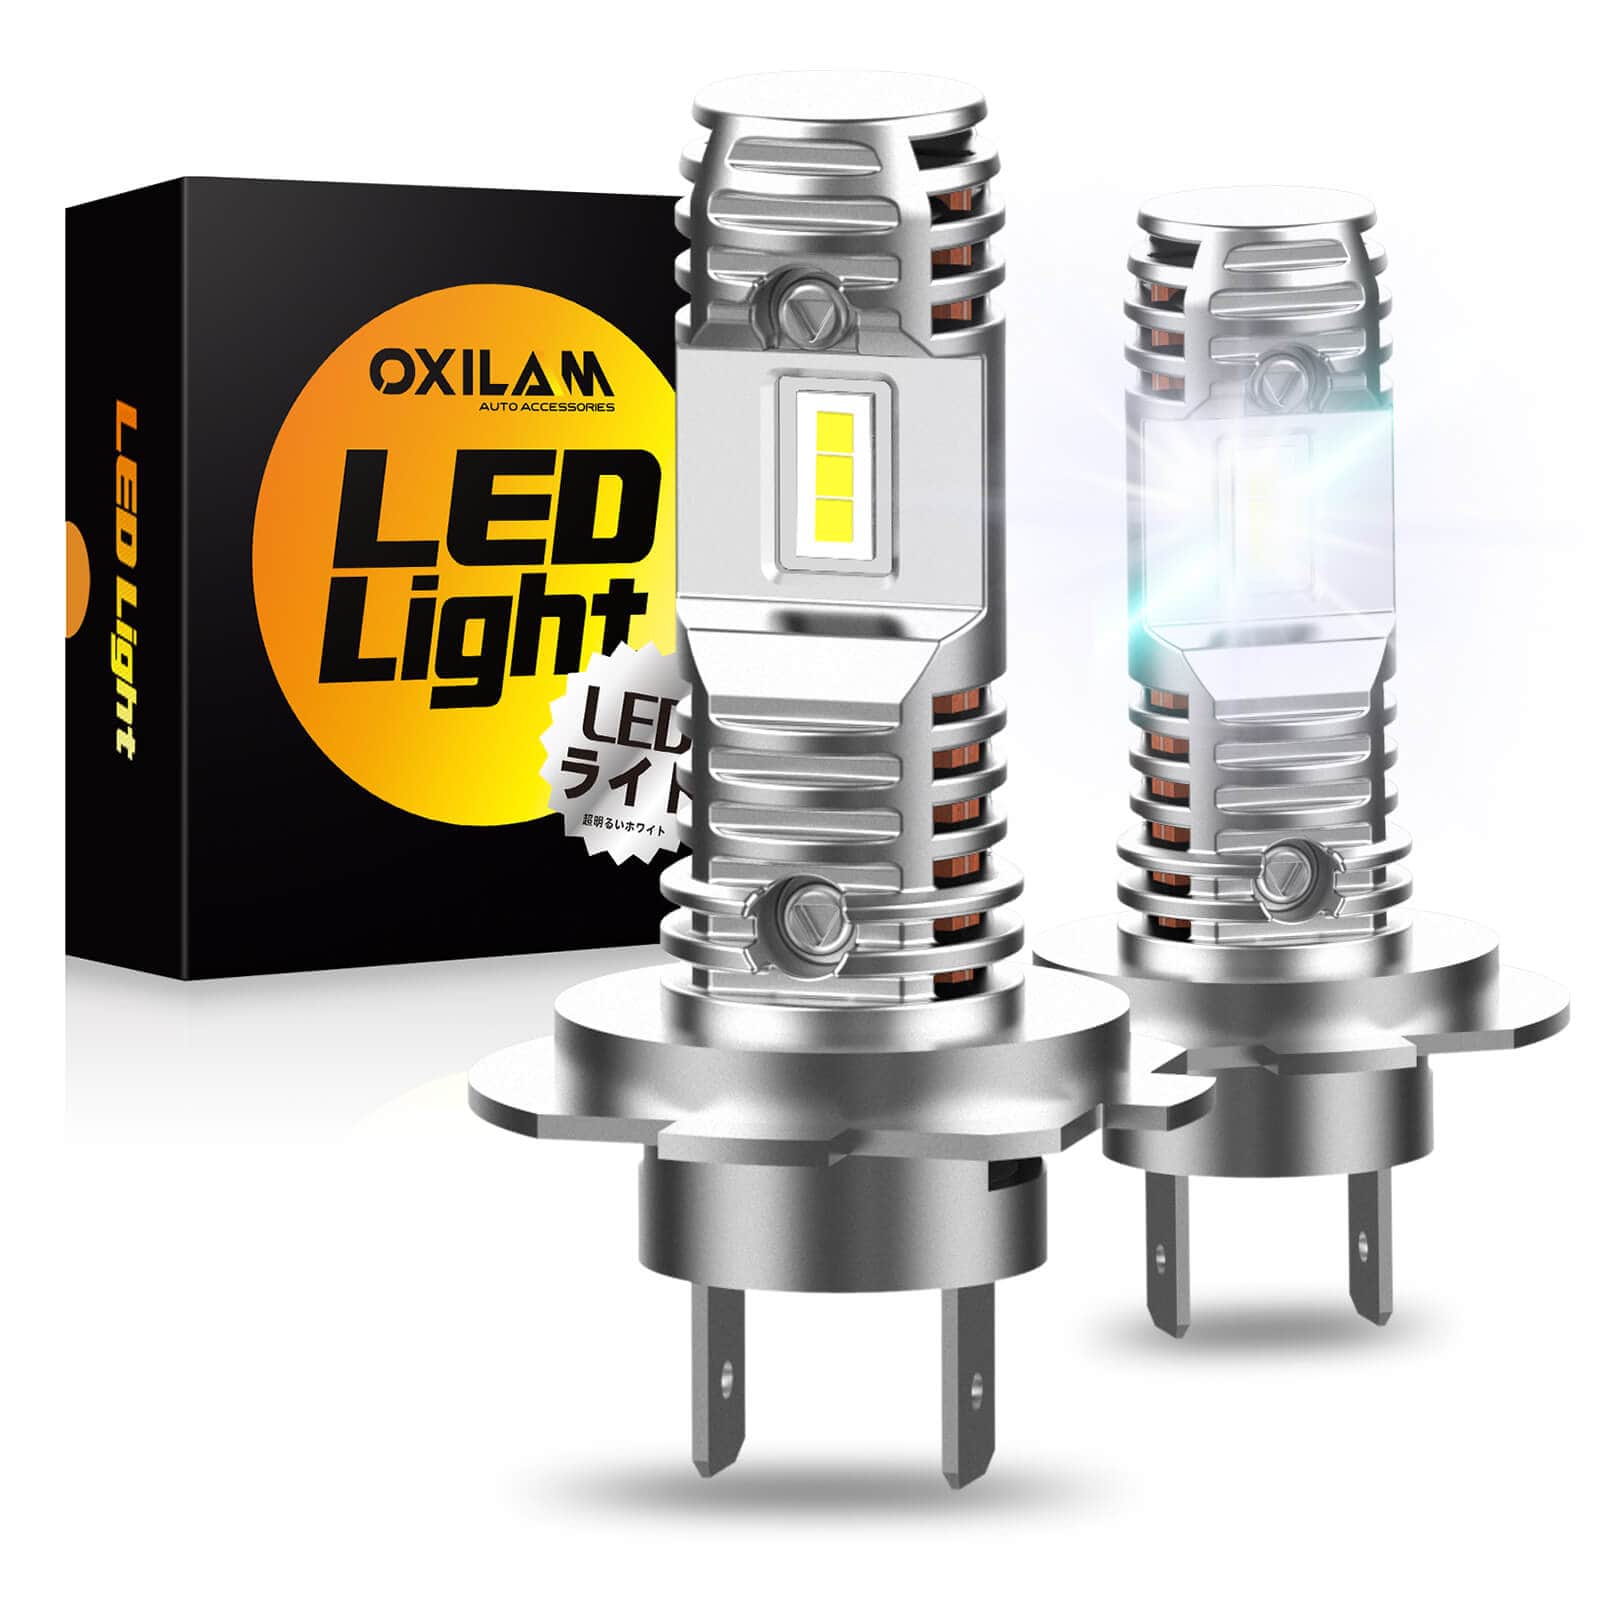 OXILAM H7 LED Headlight Bulbs, CSP LED Chips 6500K Cool White, 1:1 Min -  Oxilam